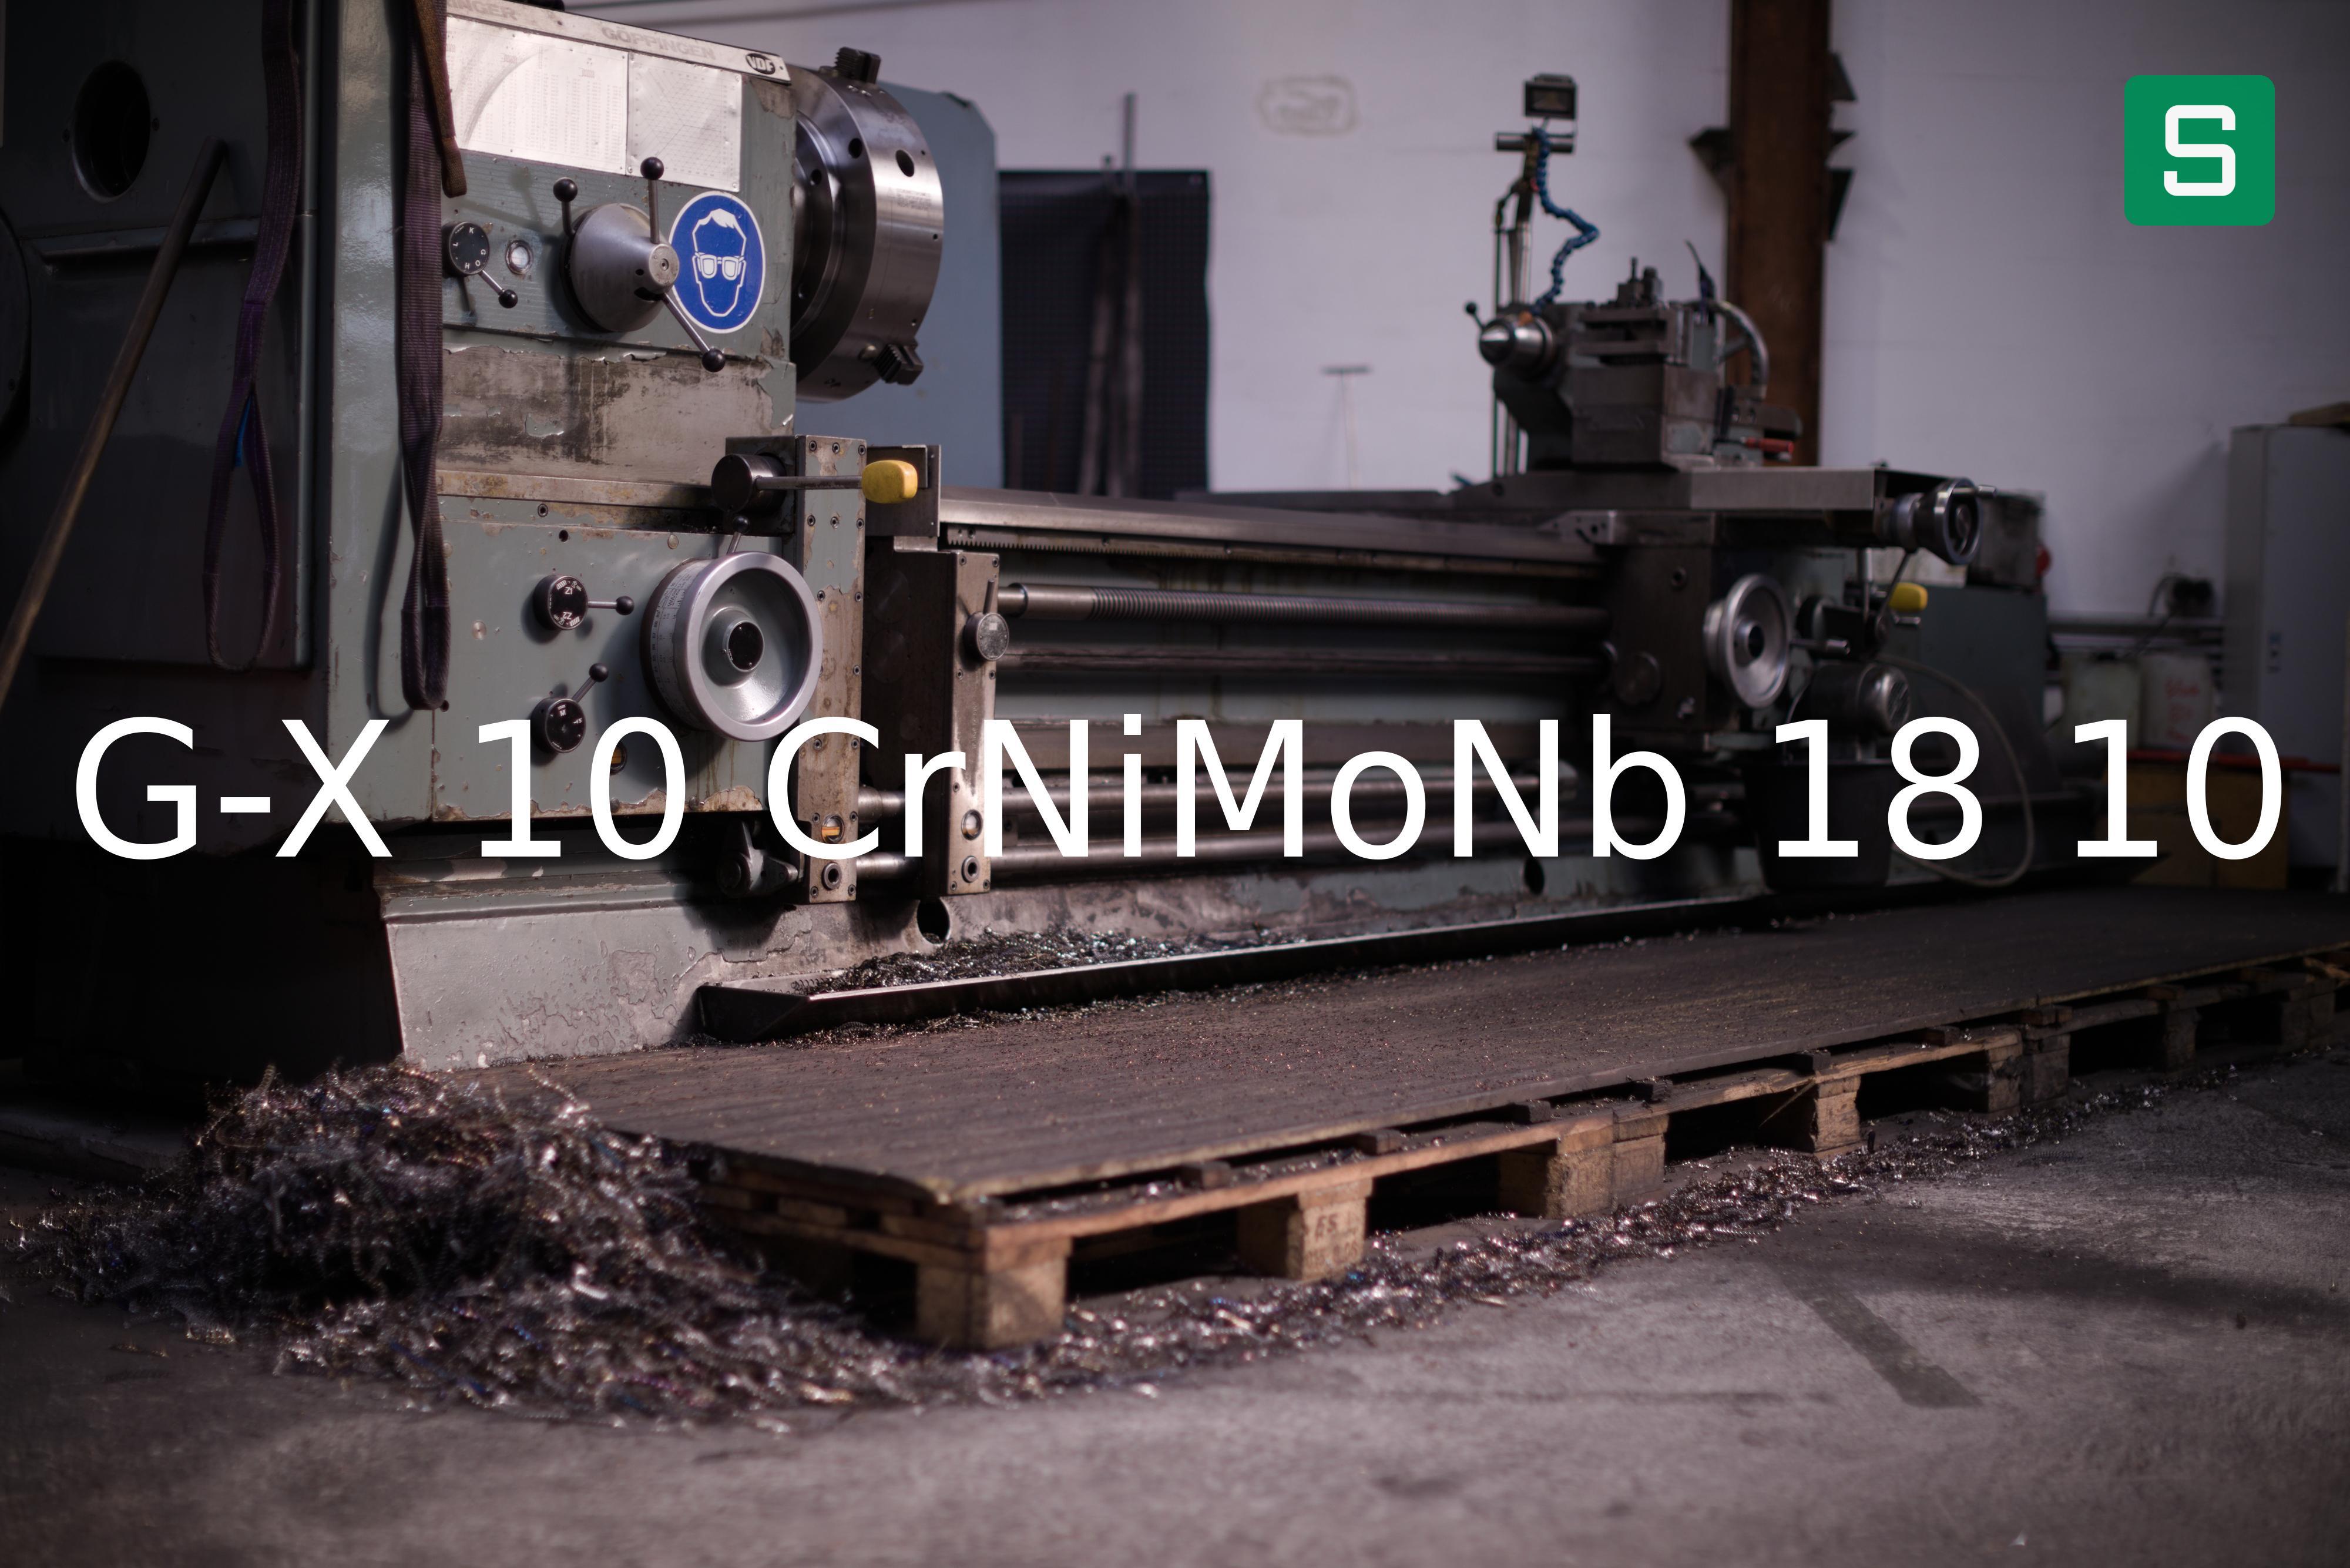 Steel Material: G-X 10 CrNiMoNb 18 10